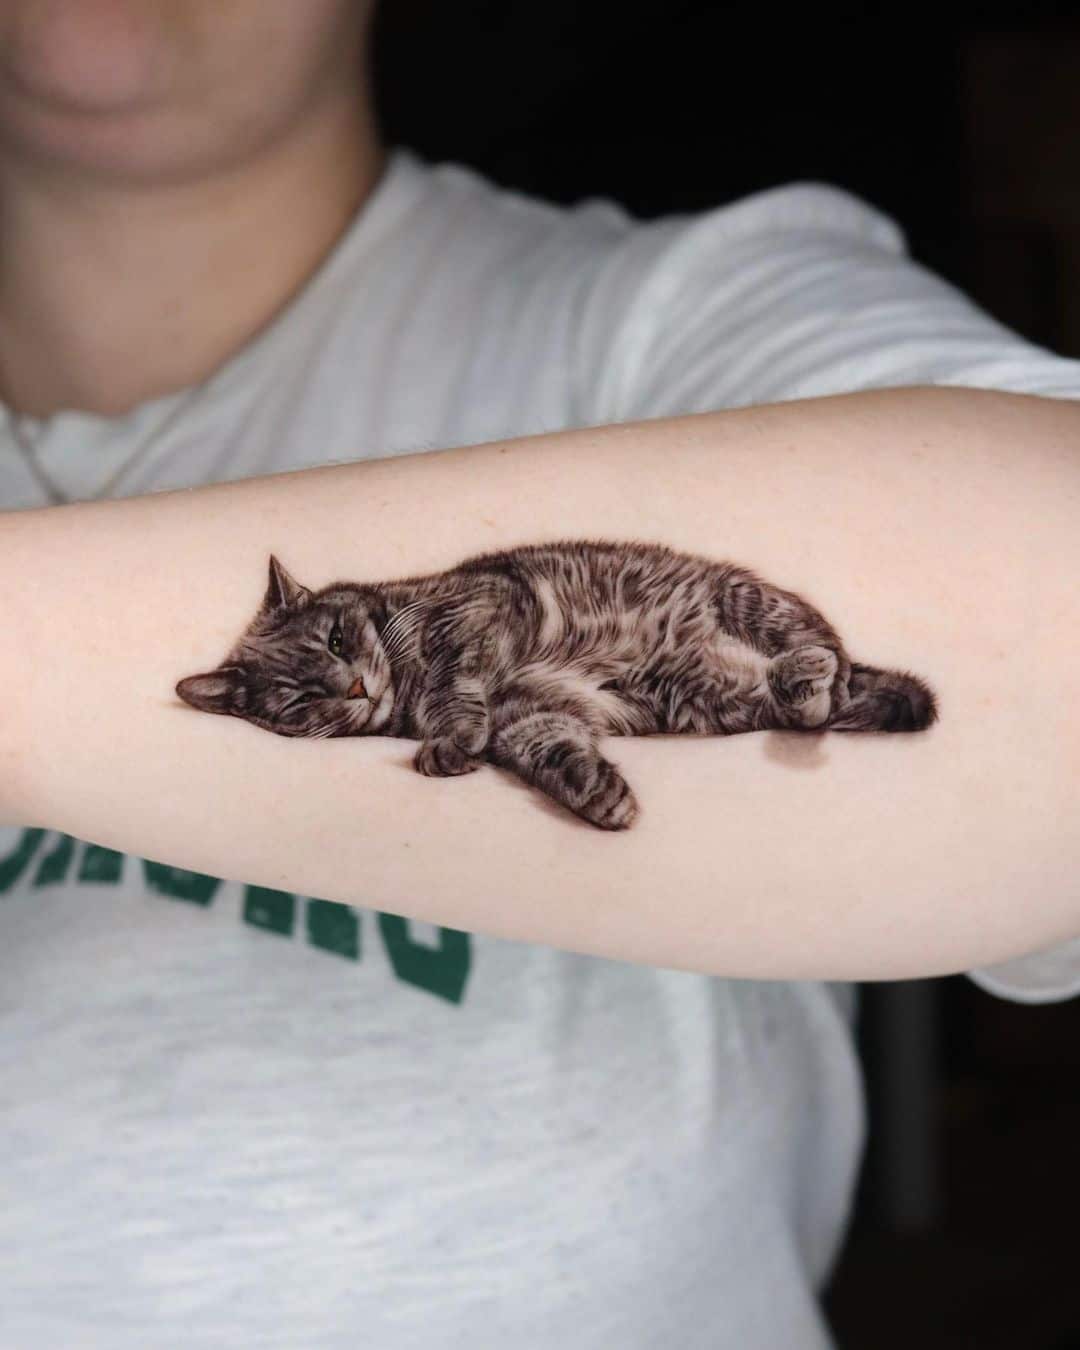 Sleeping cat tattoo design on arm by tattooist yeono